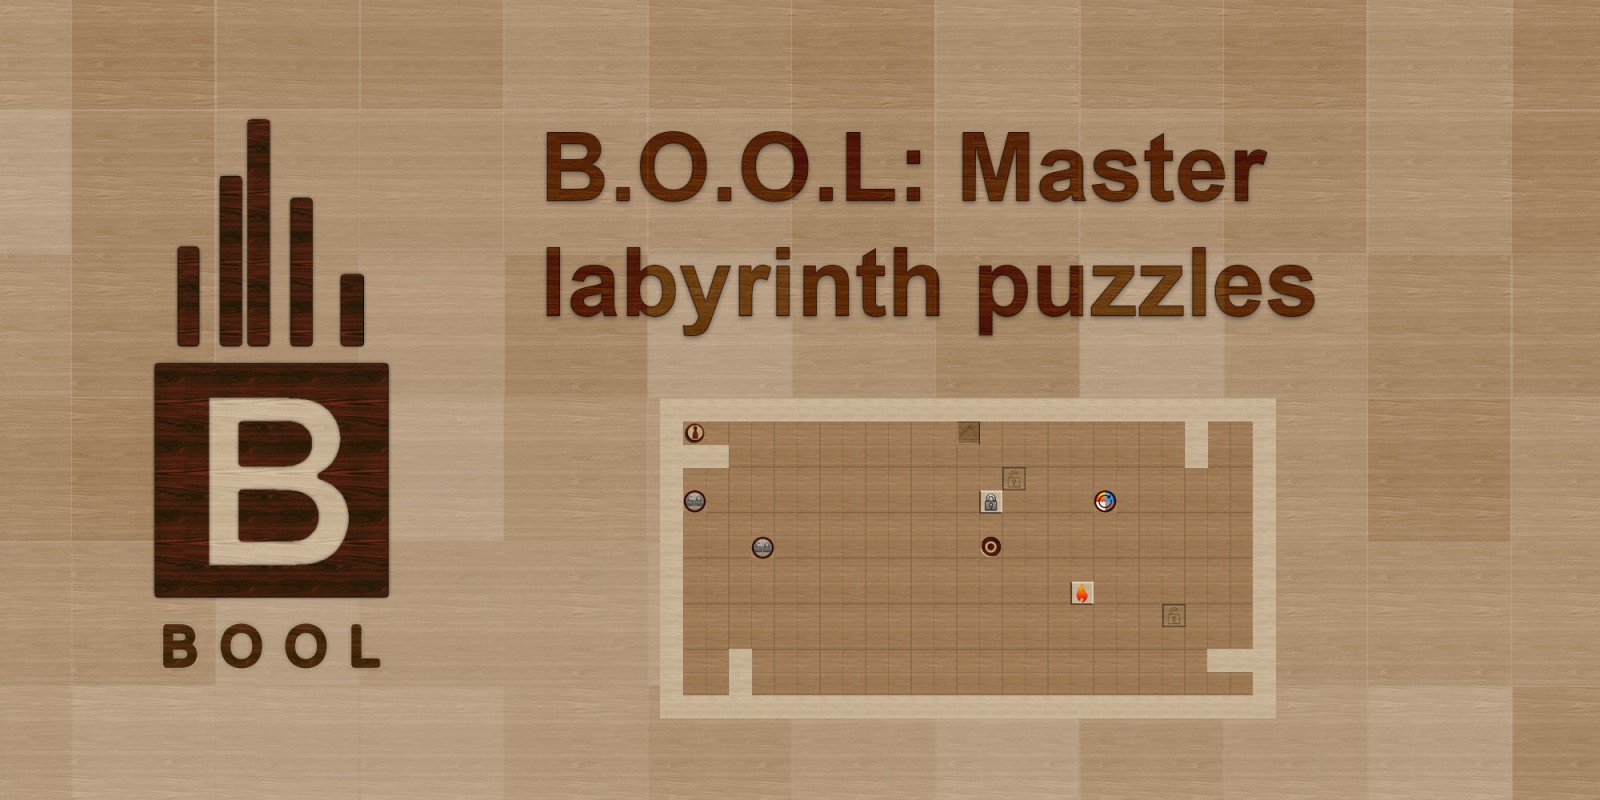 B.O.O.L: Master labyrinth puzzles